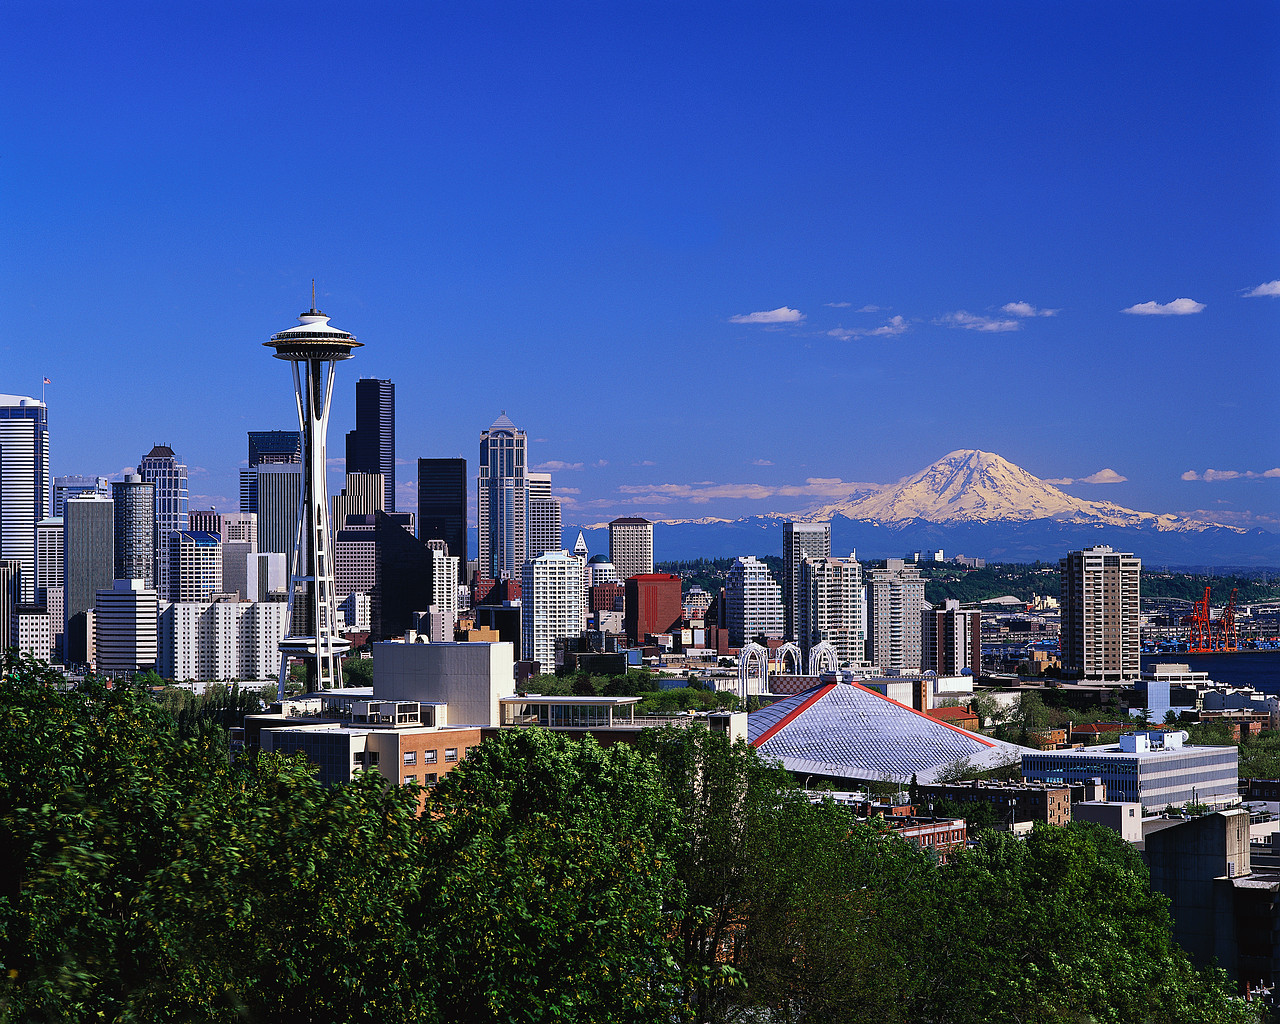 Skyline of Seattle in Washington State